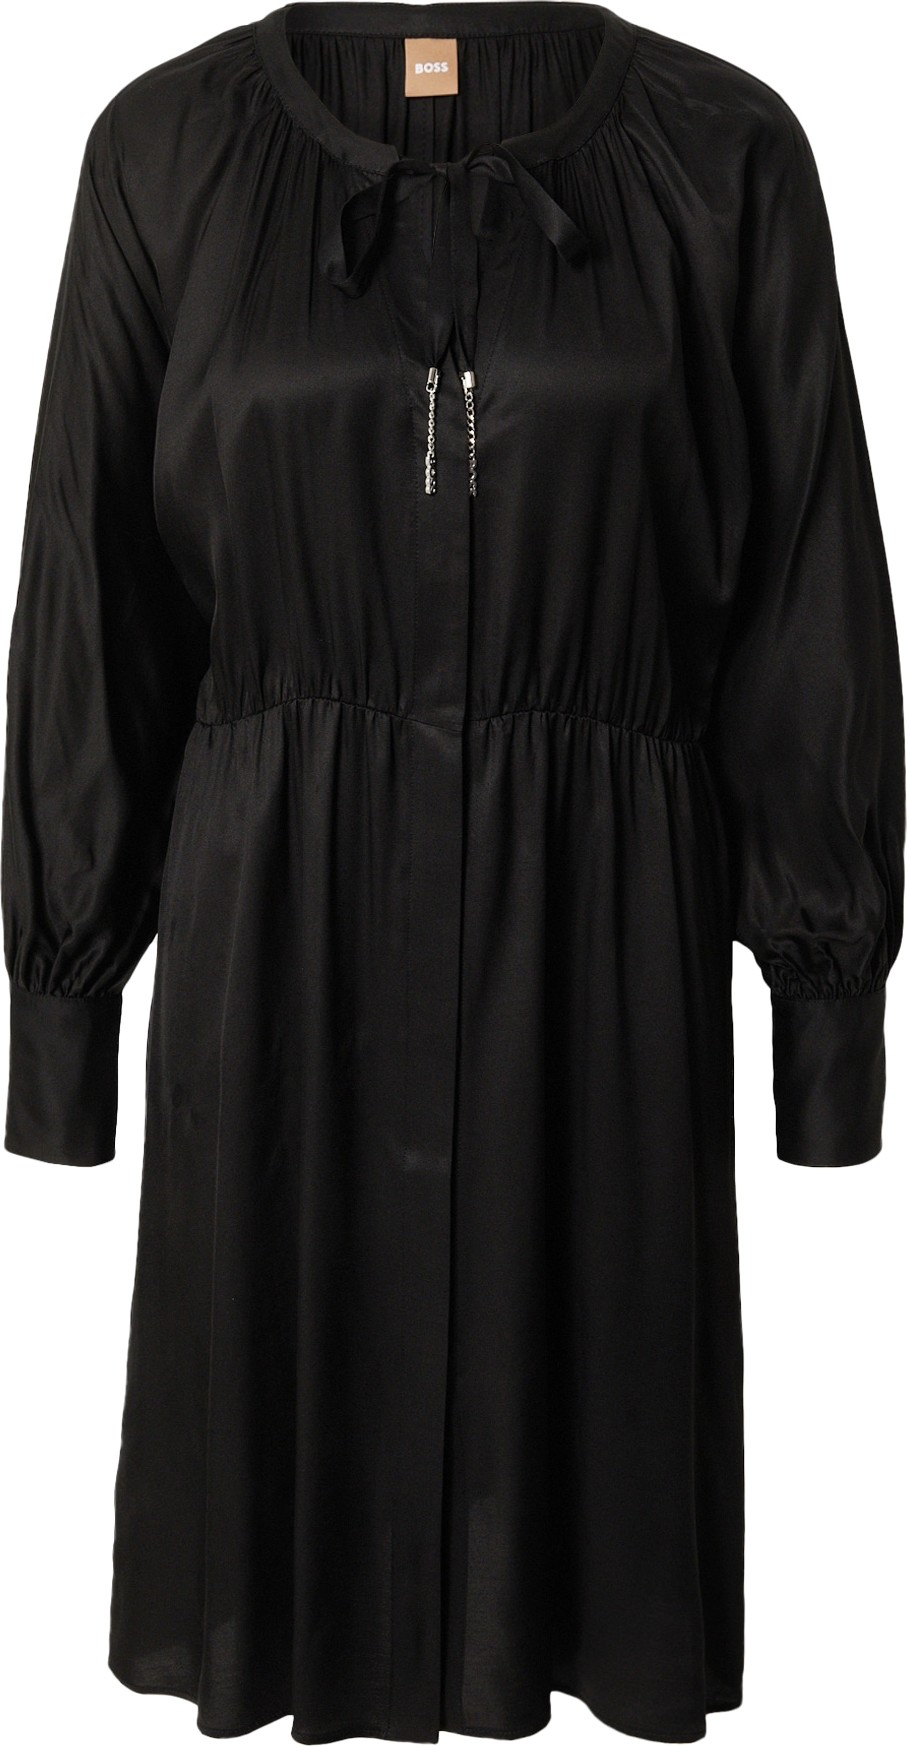 BOSS Black Košilové šaty 'Davinta1' černá